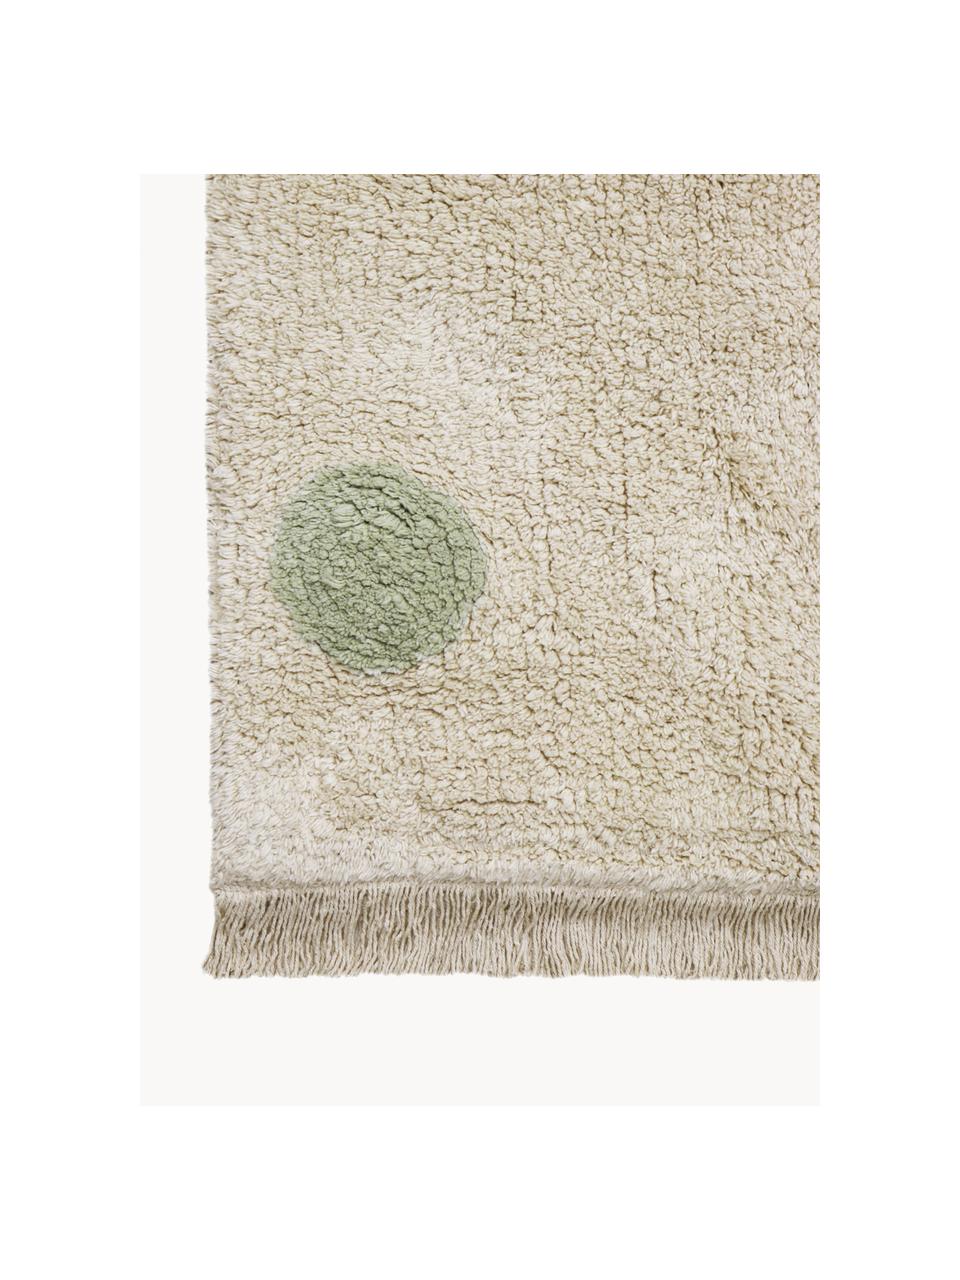 Alfombra infantil artesanal Hippy Dots, lavable, Parte superior: 97% algodón, 3% fibra sin, Reverso: 100% algodón, Beige claro, verde salvia, An 120 x L 160 cm (Tamaño S)